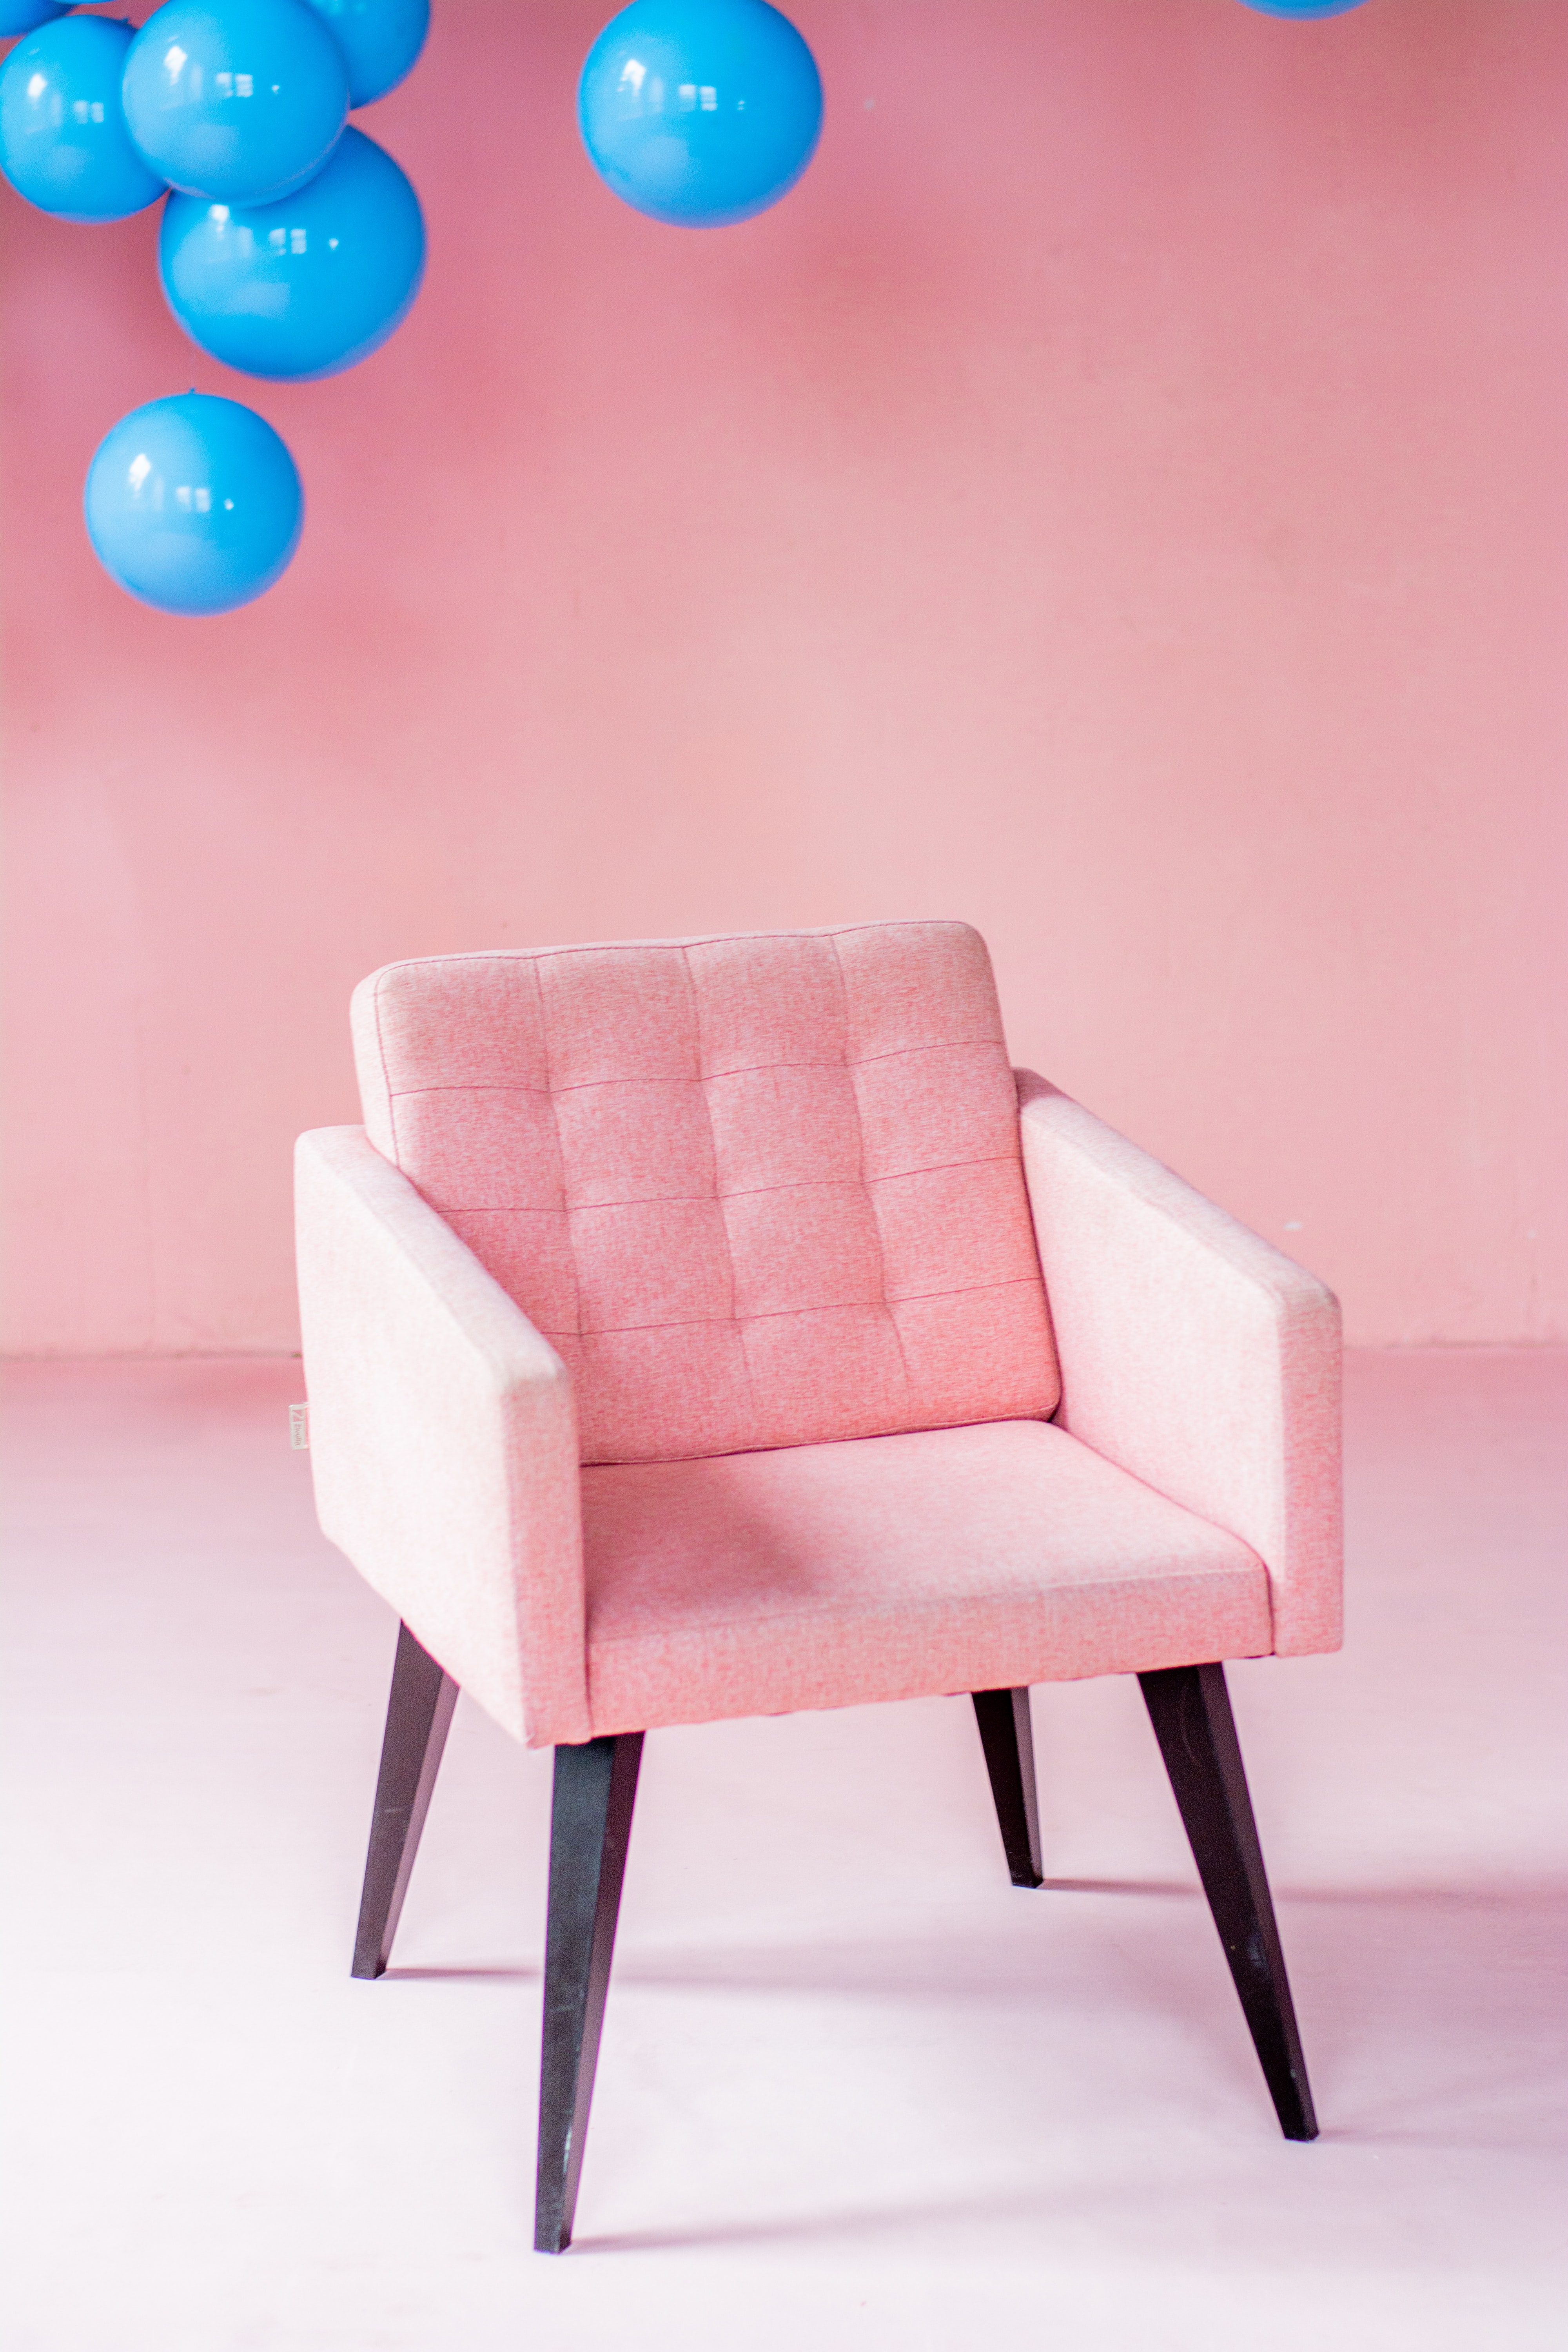 1920x1080 Background balls, pink, miscellanea, miscellaneous, armchair